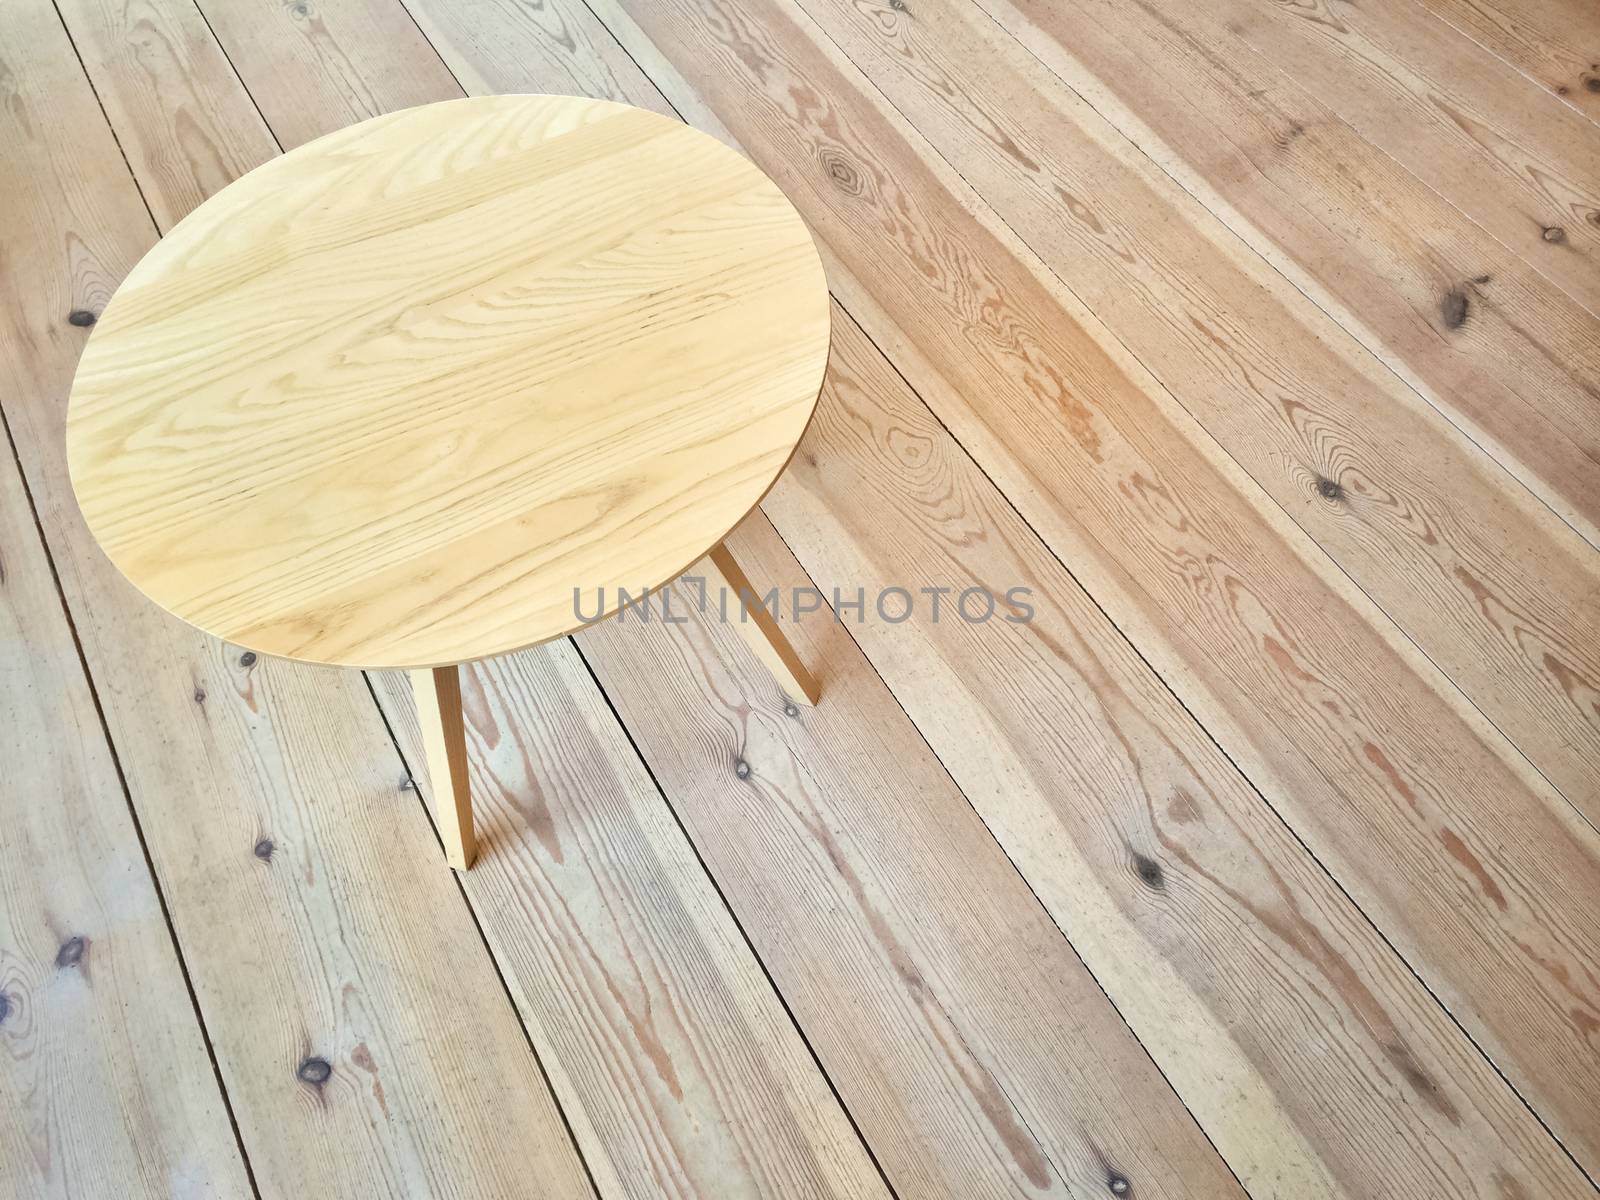 Simple round table on wooden floor. Modern design.